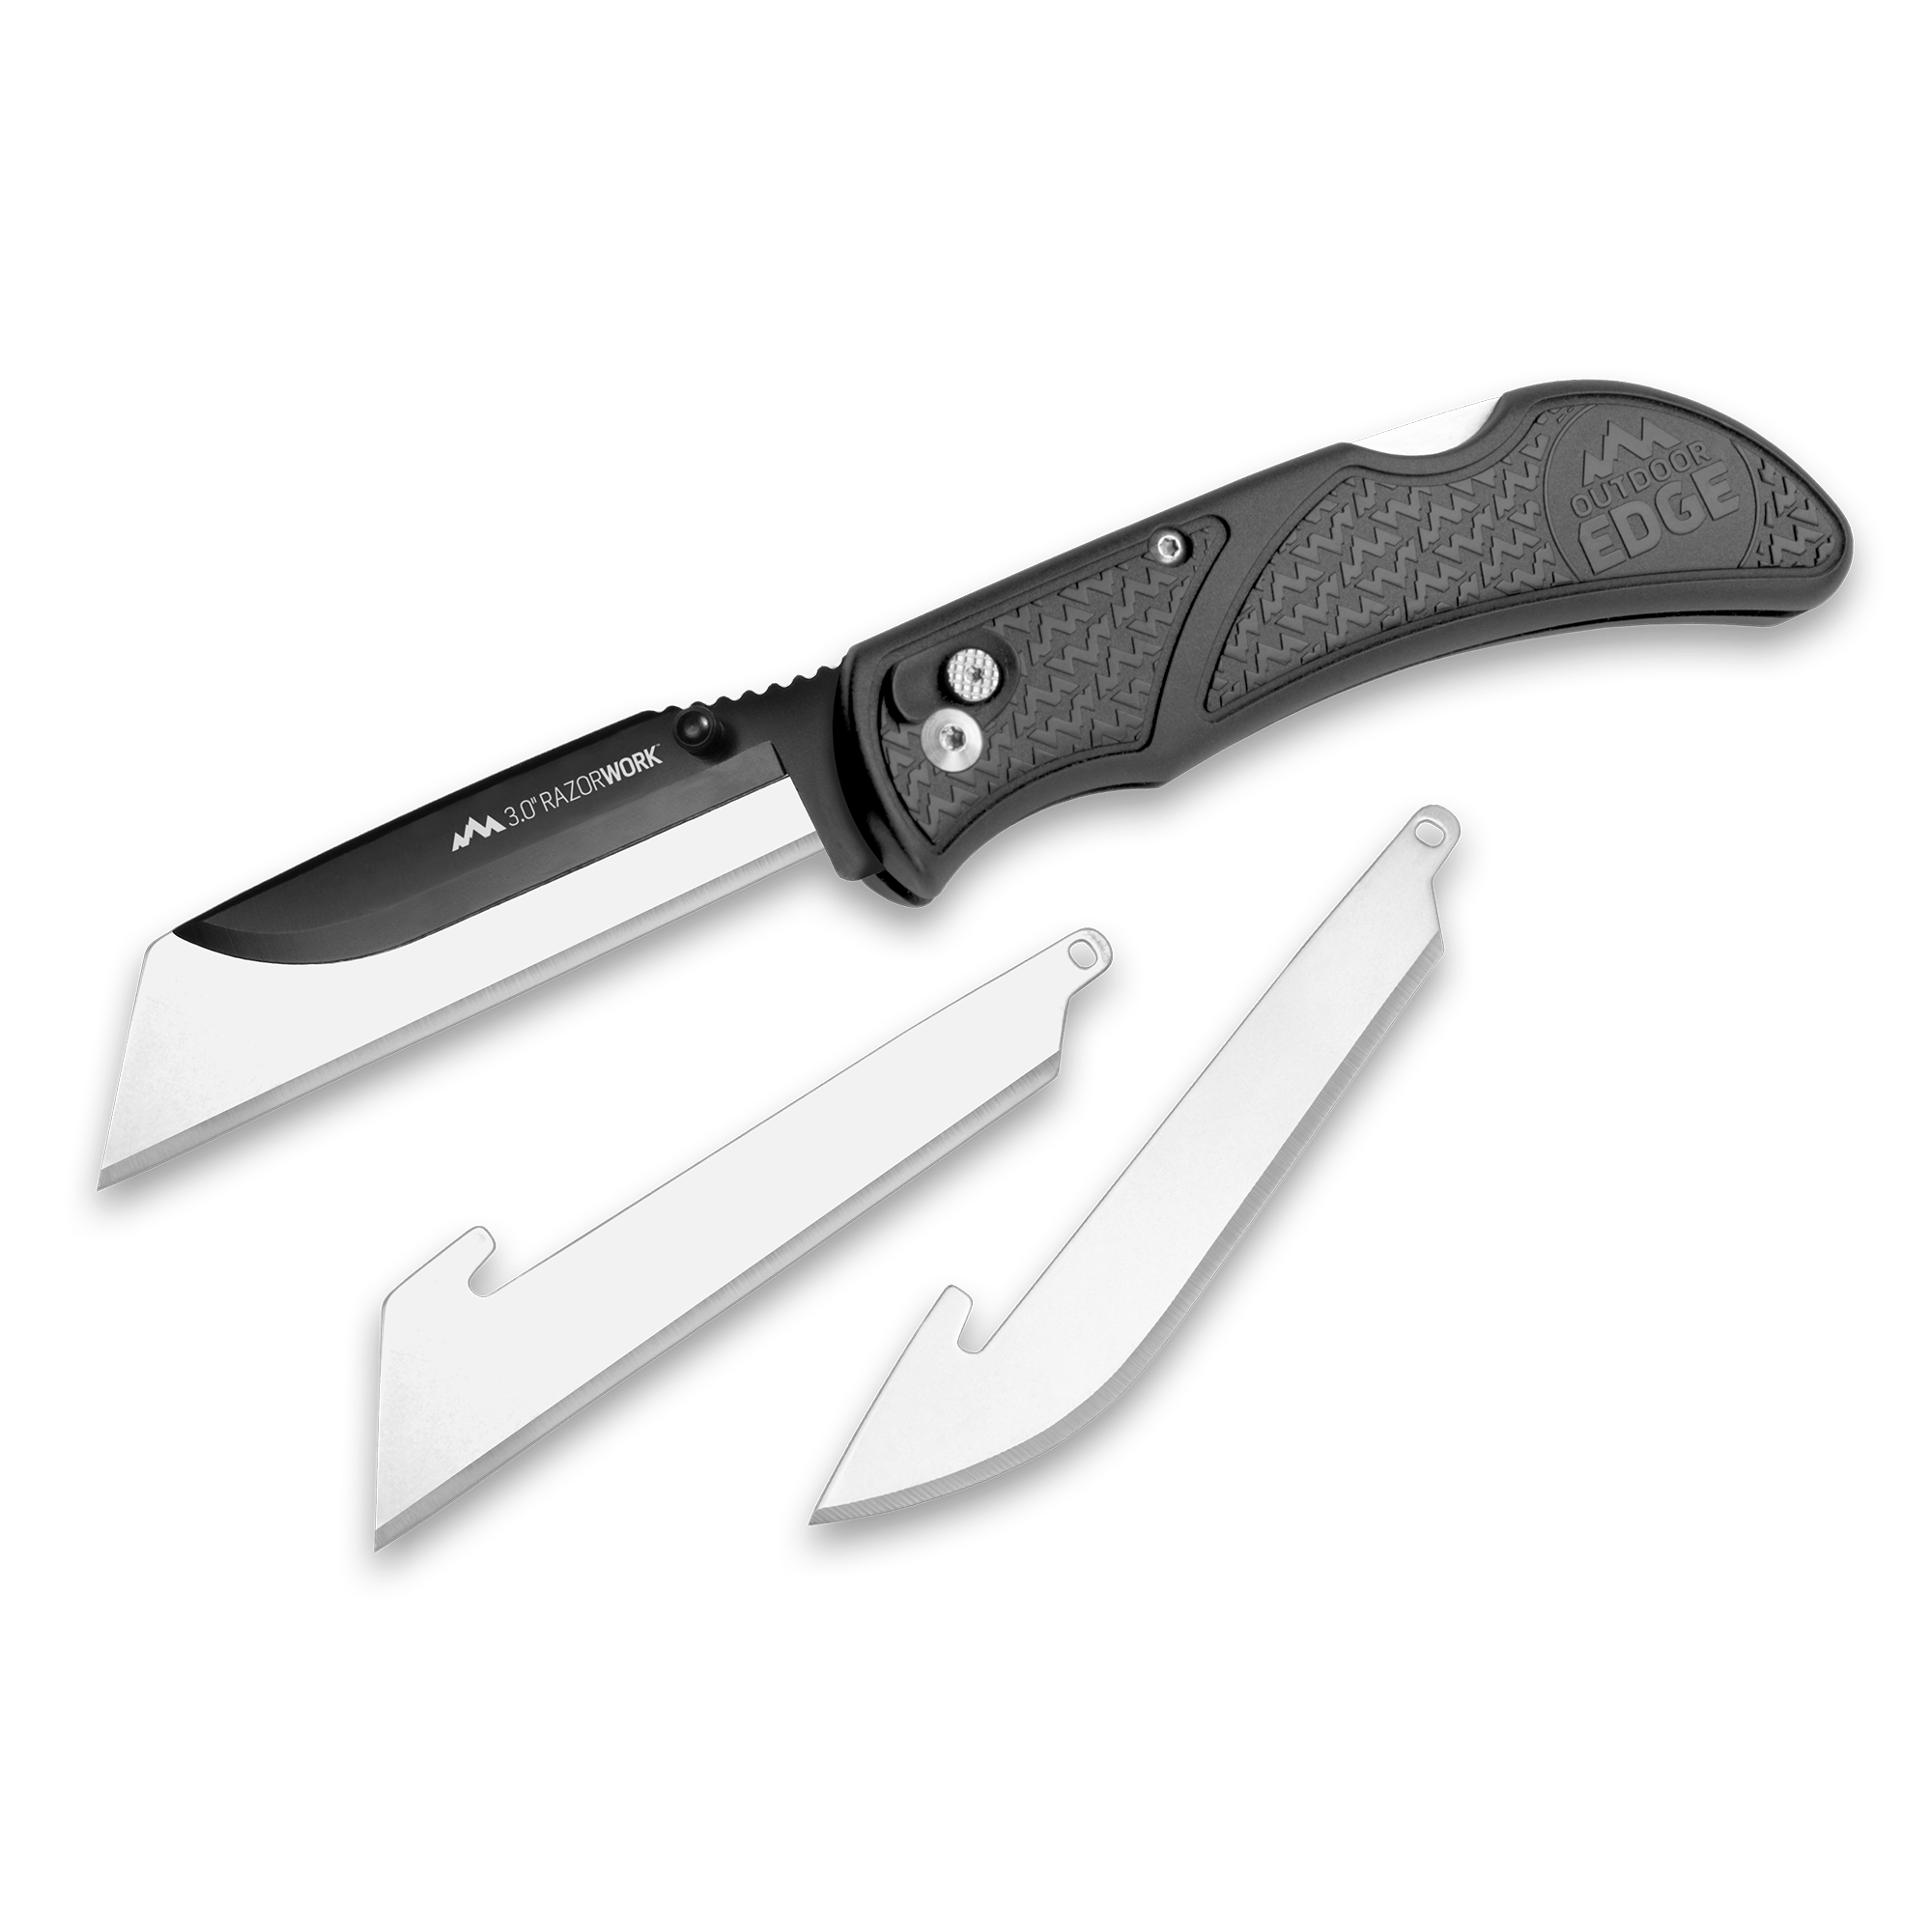 Outdoor Edge RazorSafe 6-Blade Folding Utility Knife in the